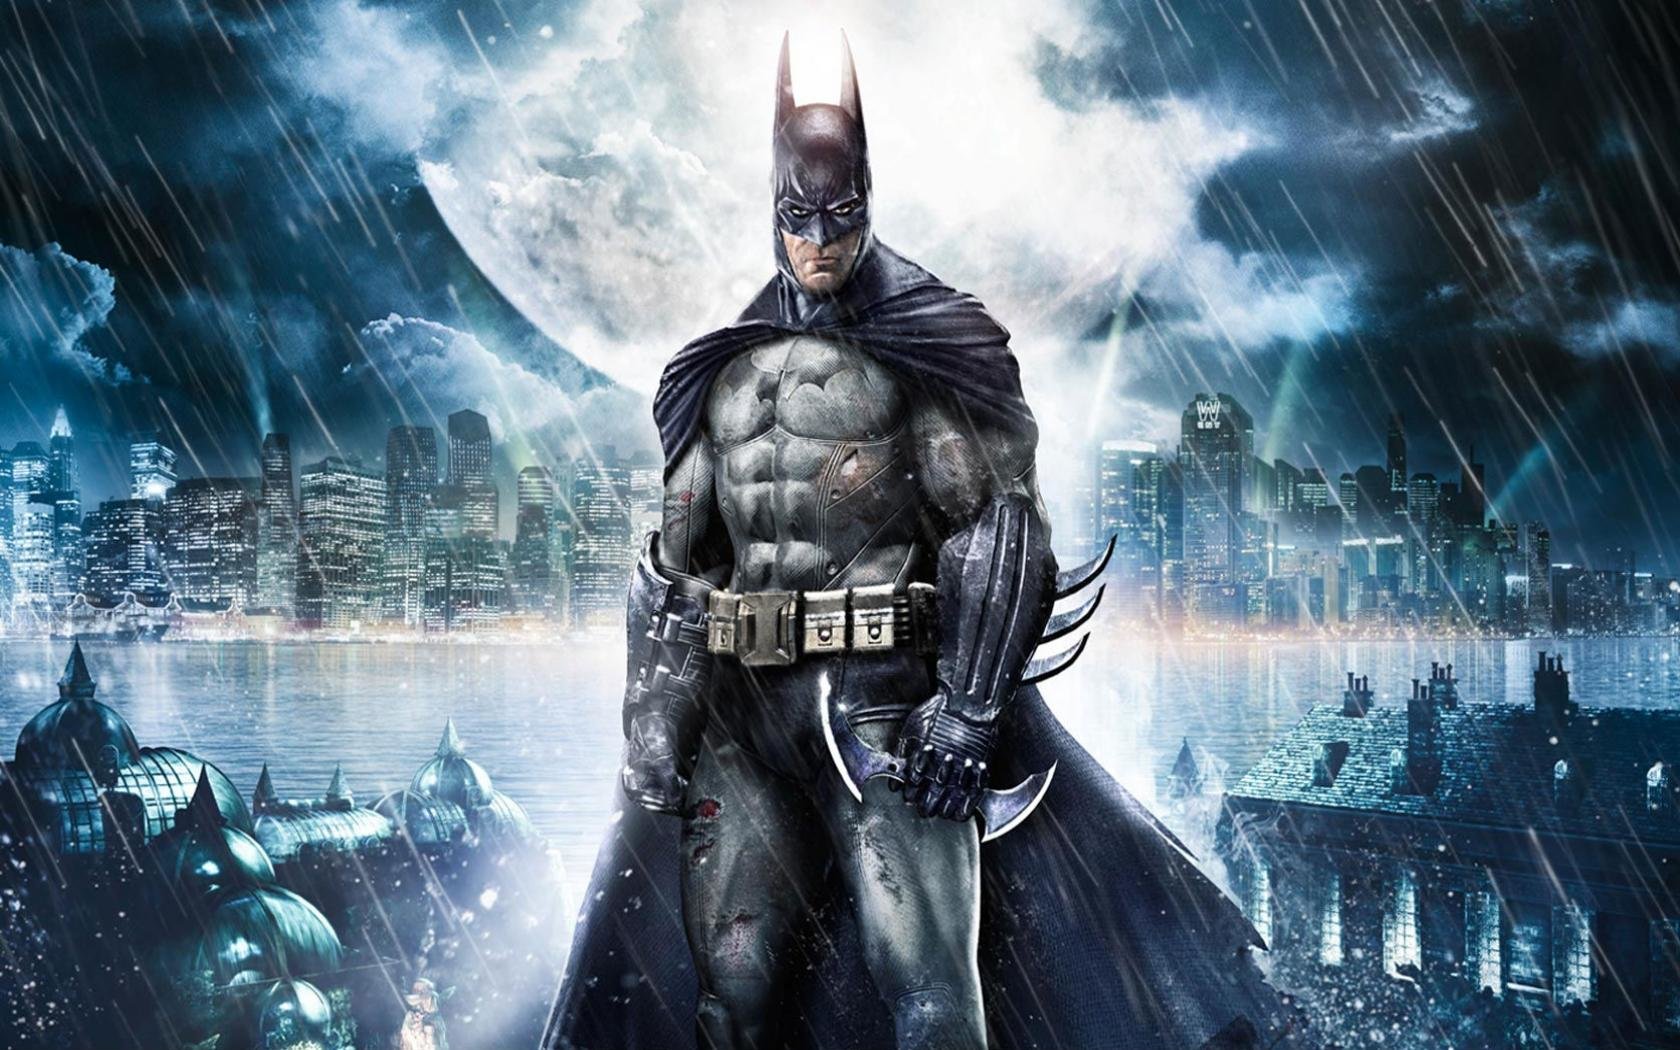 Download hd 1680x1050 Batman Video Game desktop background ID:39895 for free